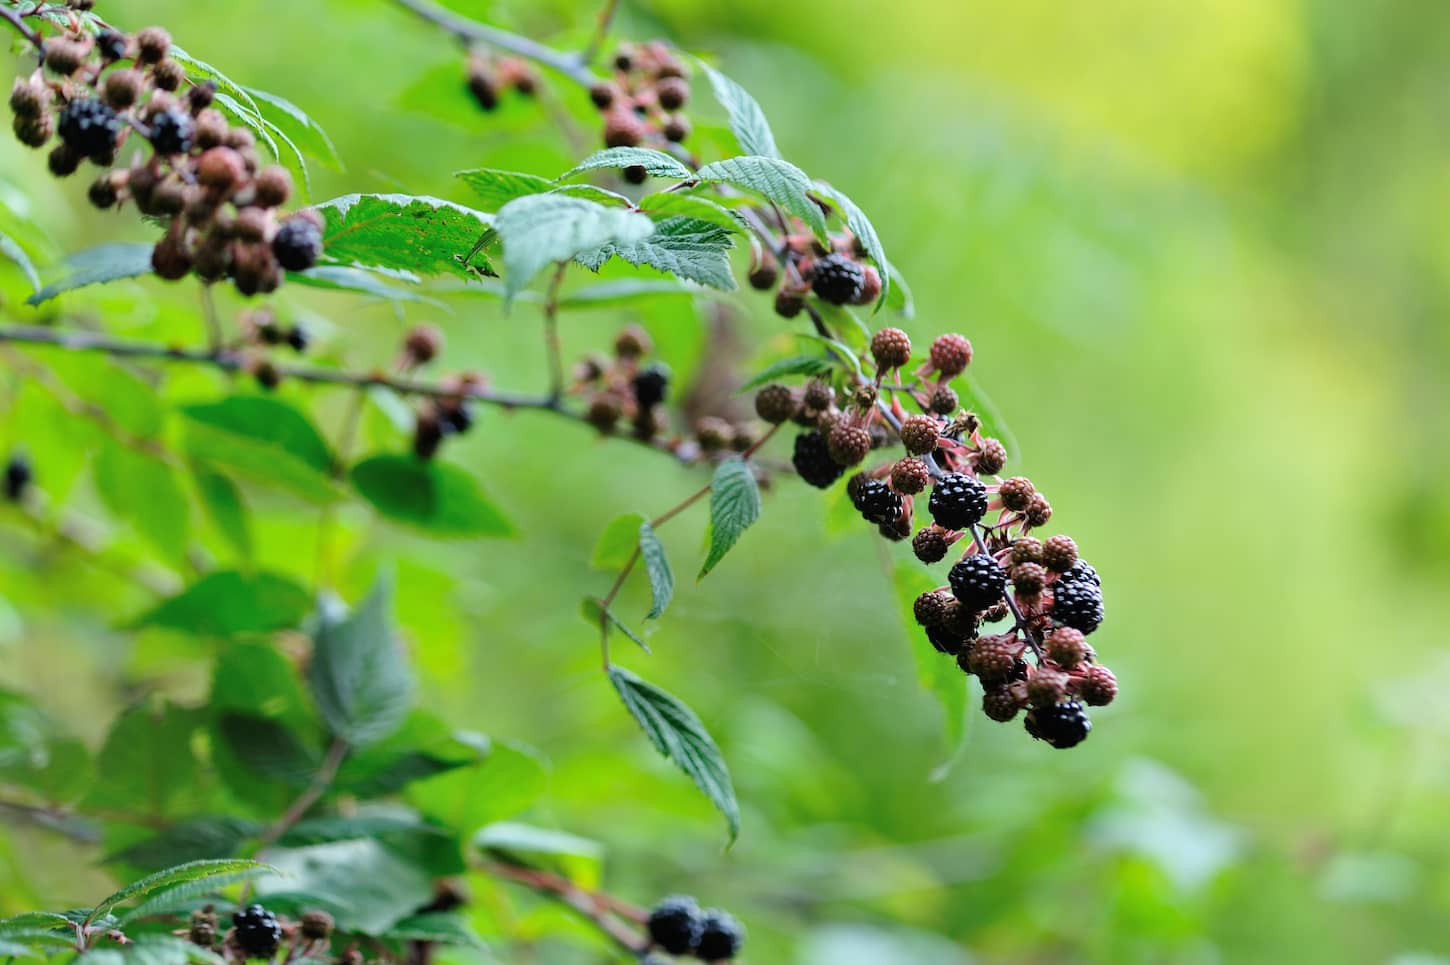 An image of blackberries growing outdoors.